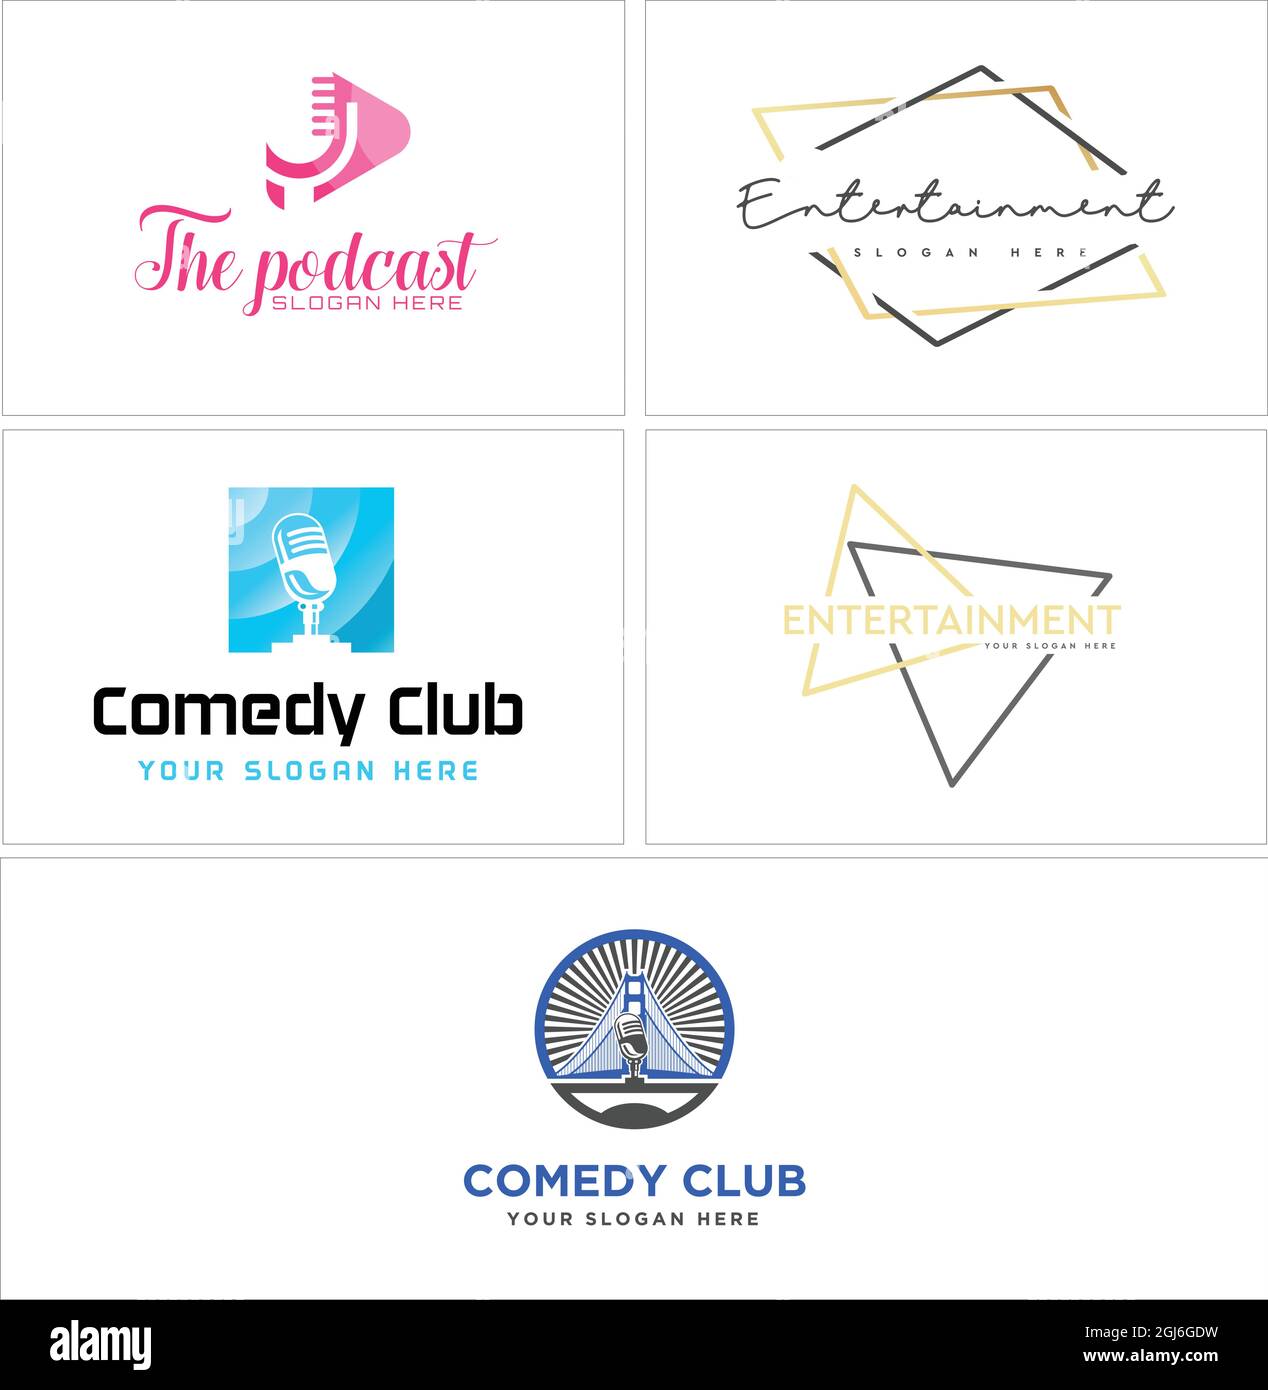 Entertainment podcast comedy club logo design Stock Vector